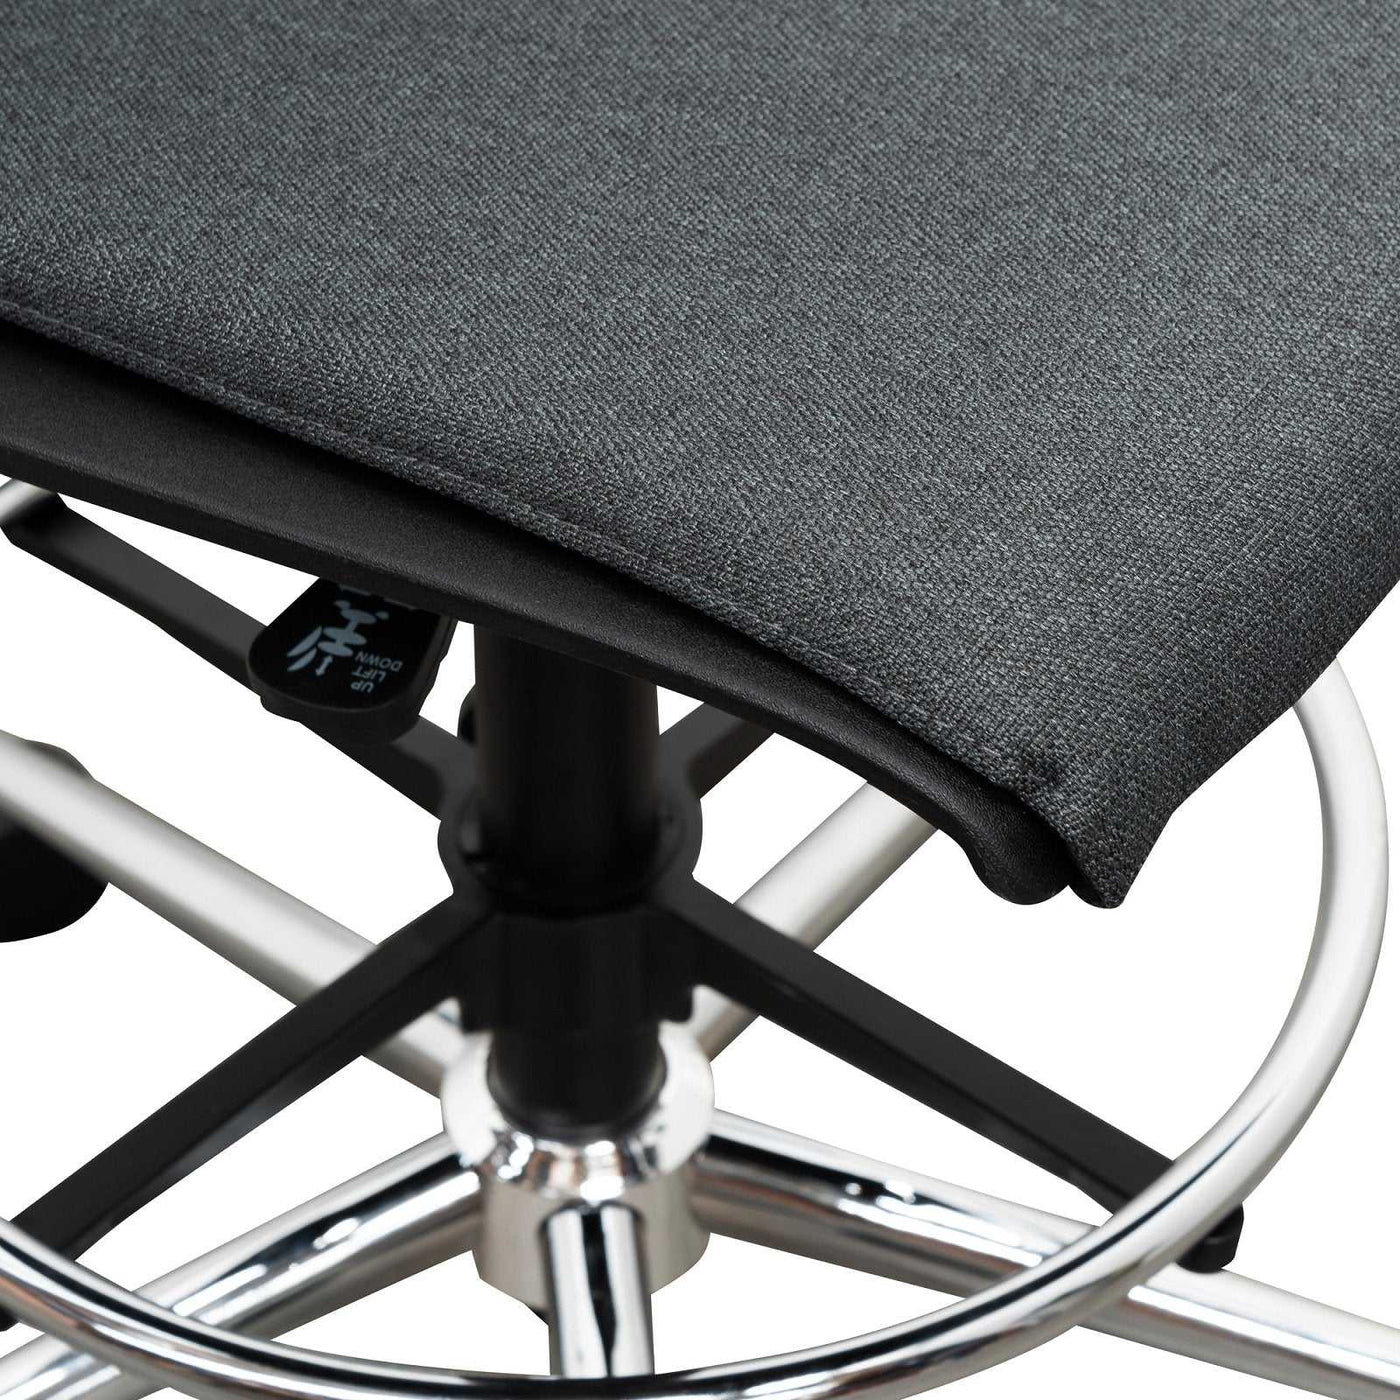 Drafting Office Chair - Black seat cushion